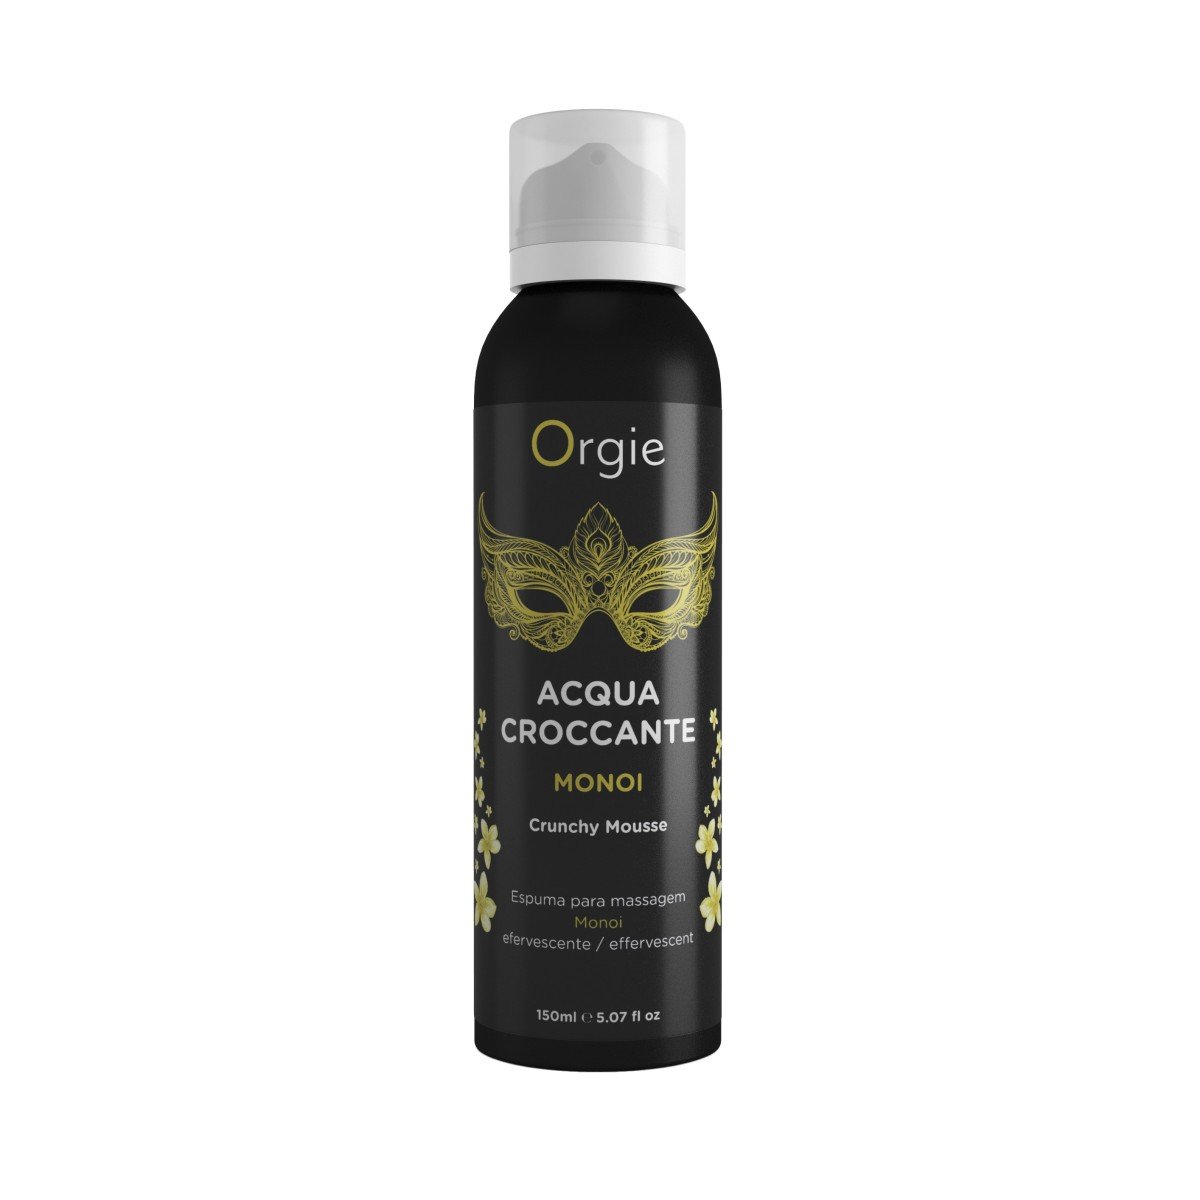 Orgie Acqua Croccante Monoi 150 ml, šumivá pěna pro masáž a předehru